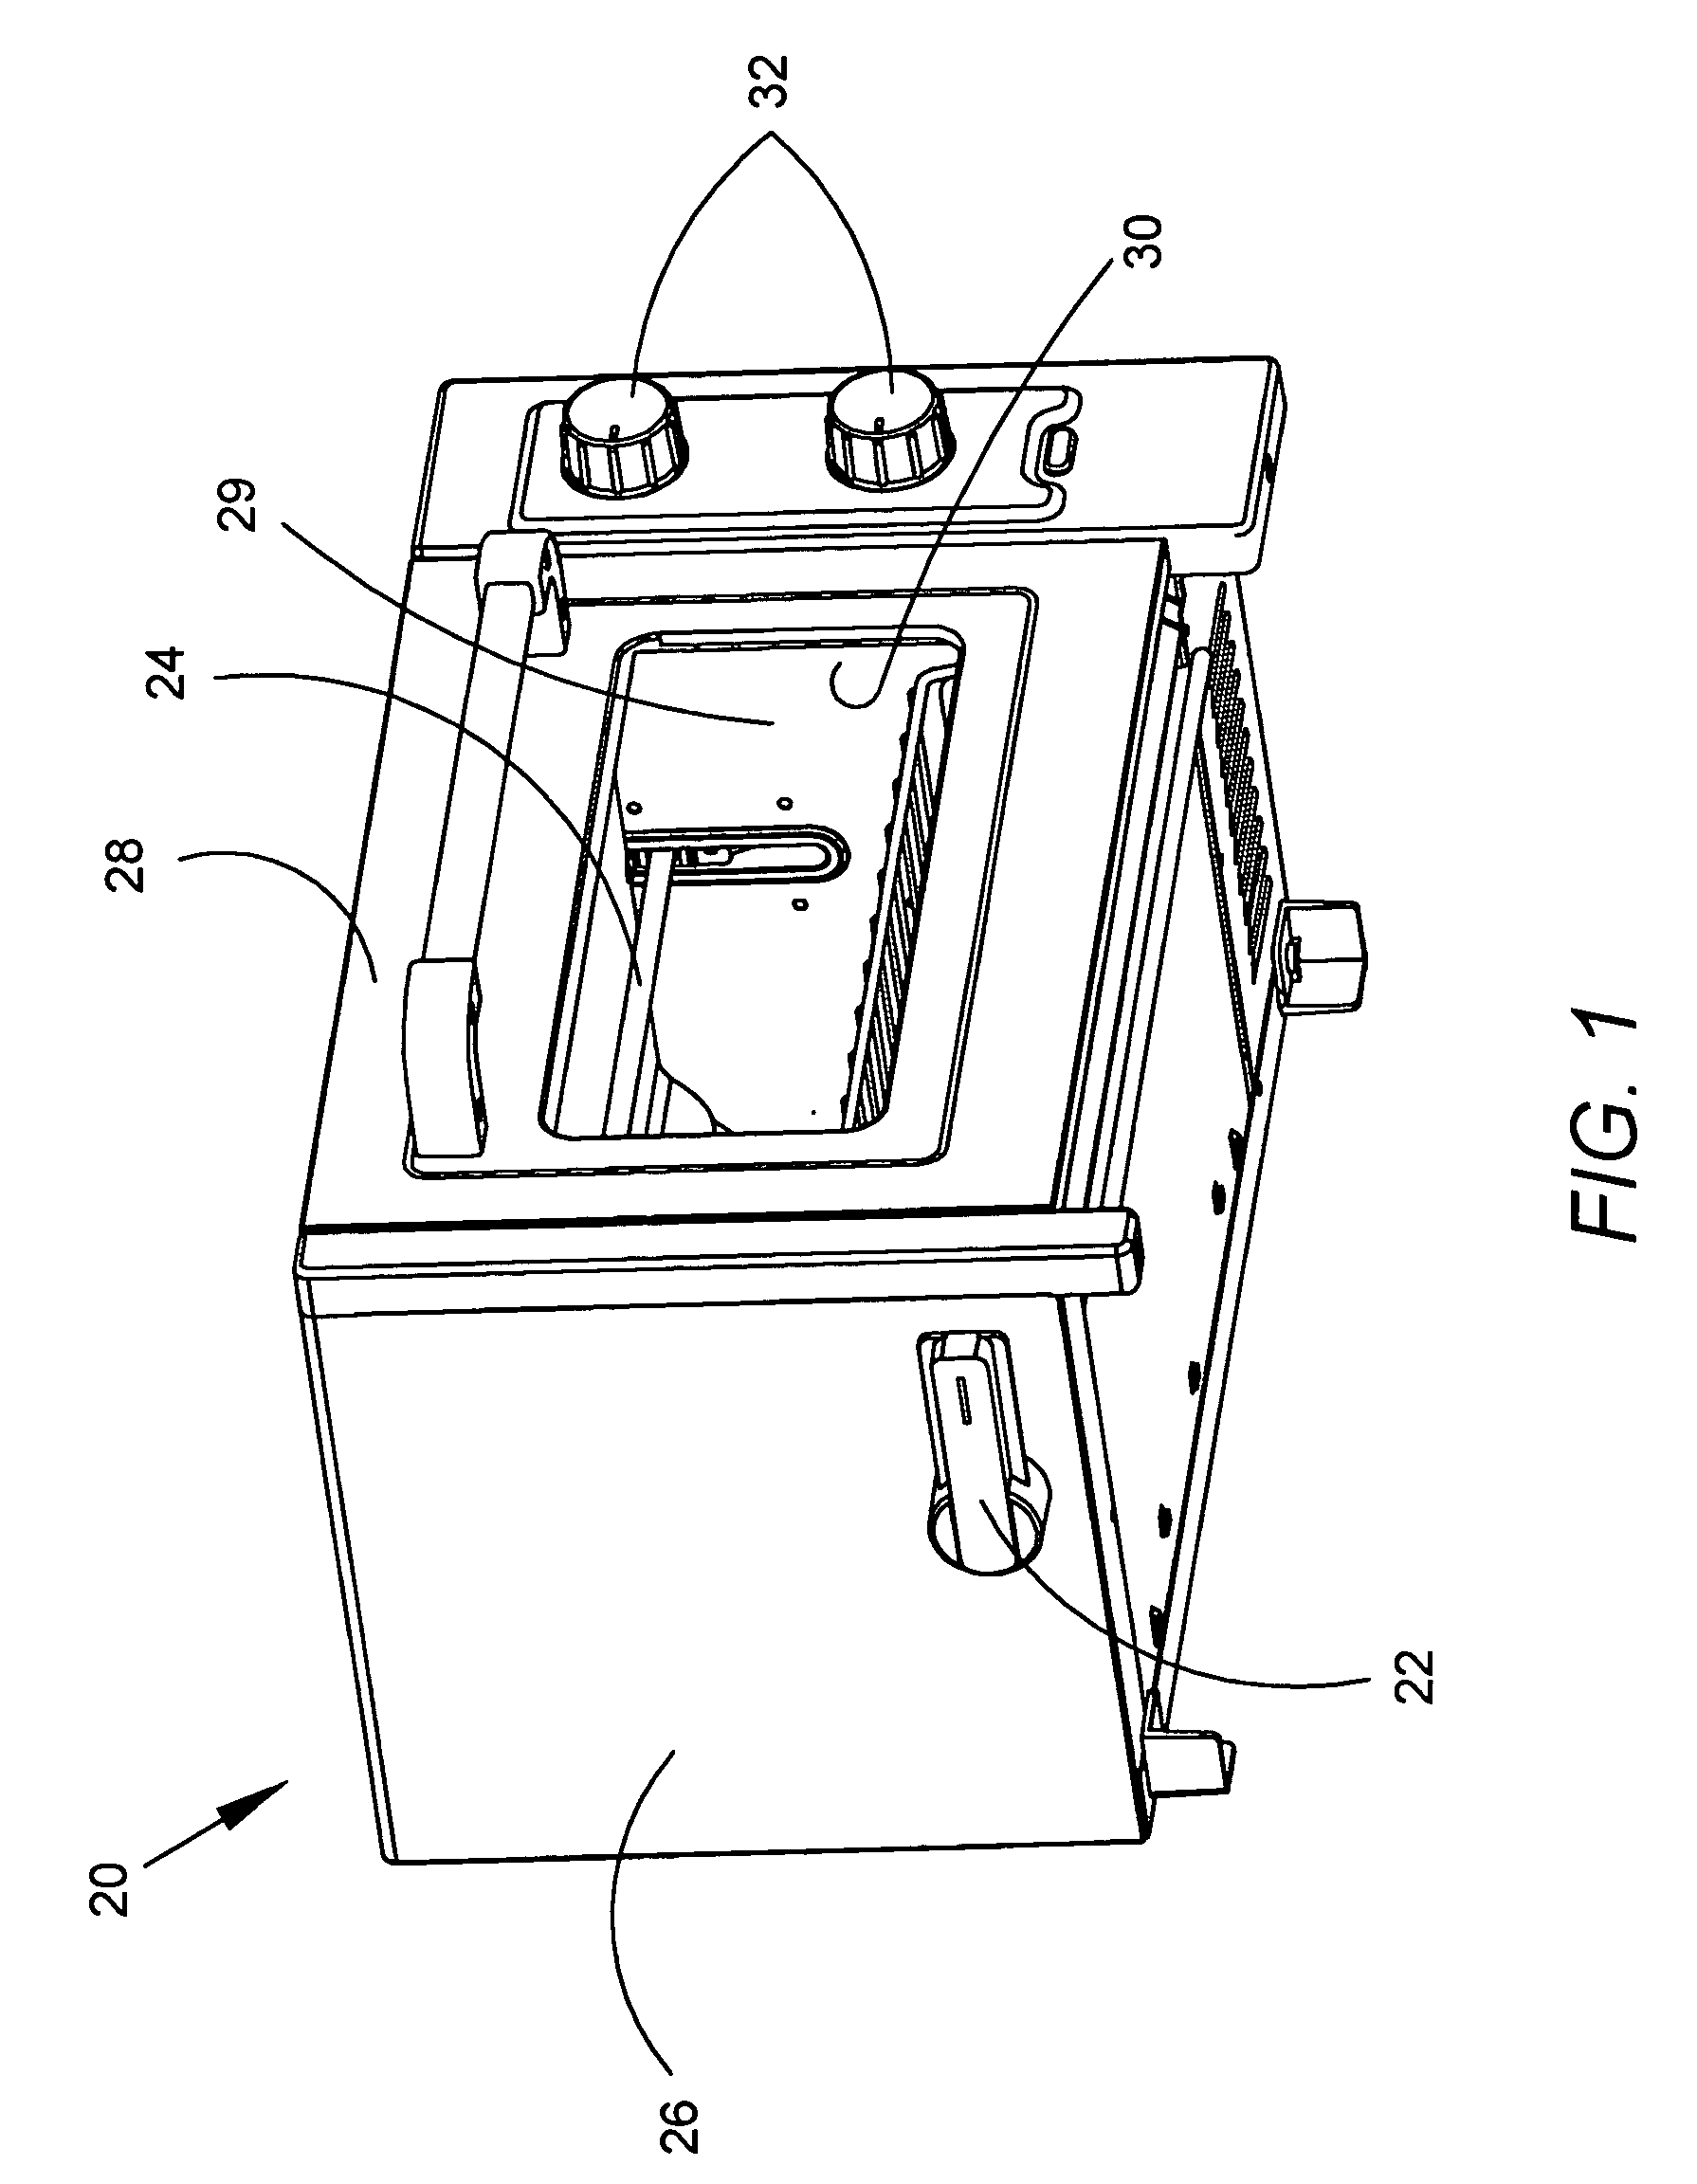 Reconfigurable food heating apparatus